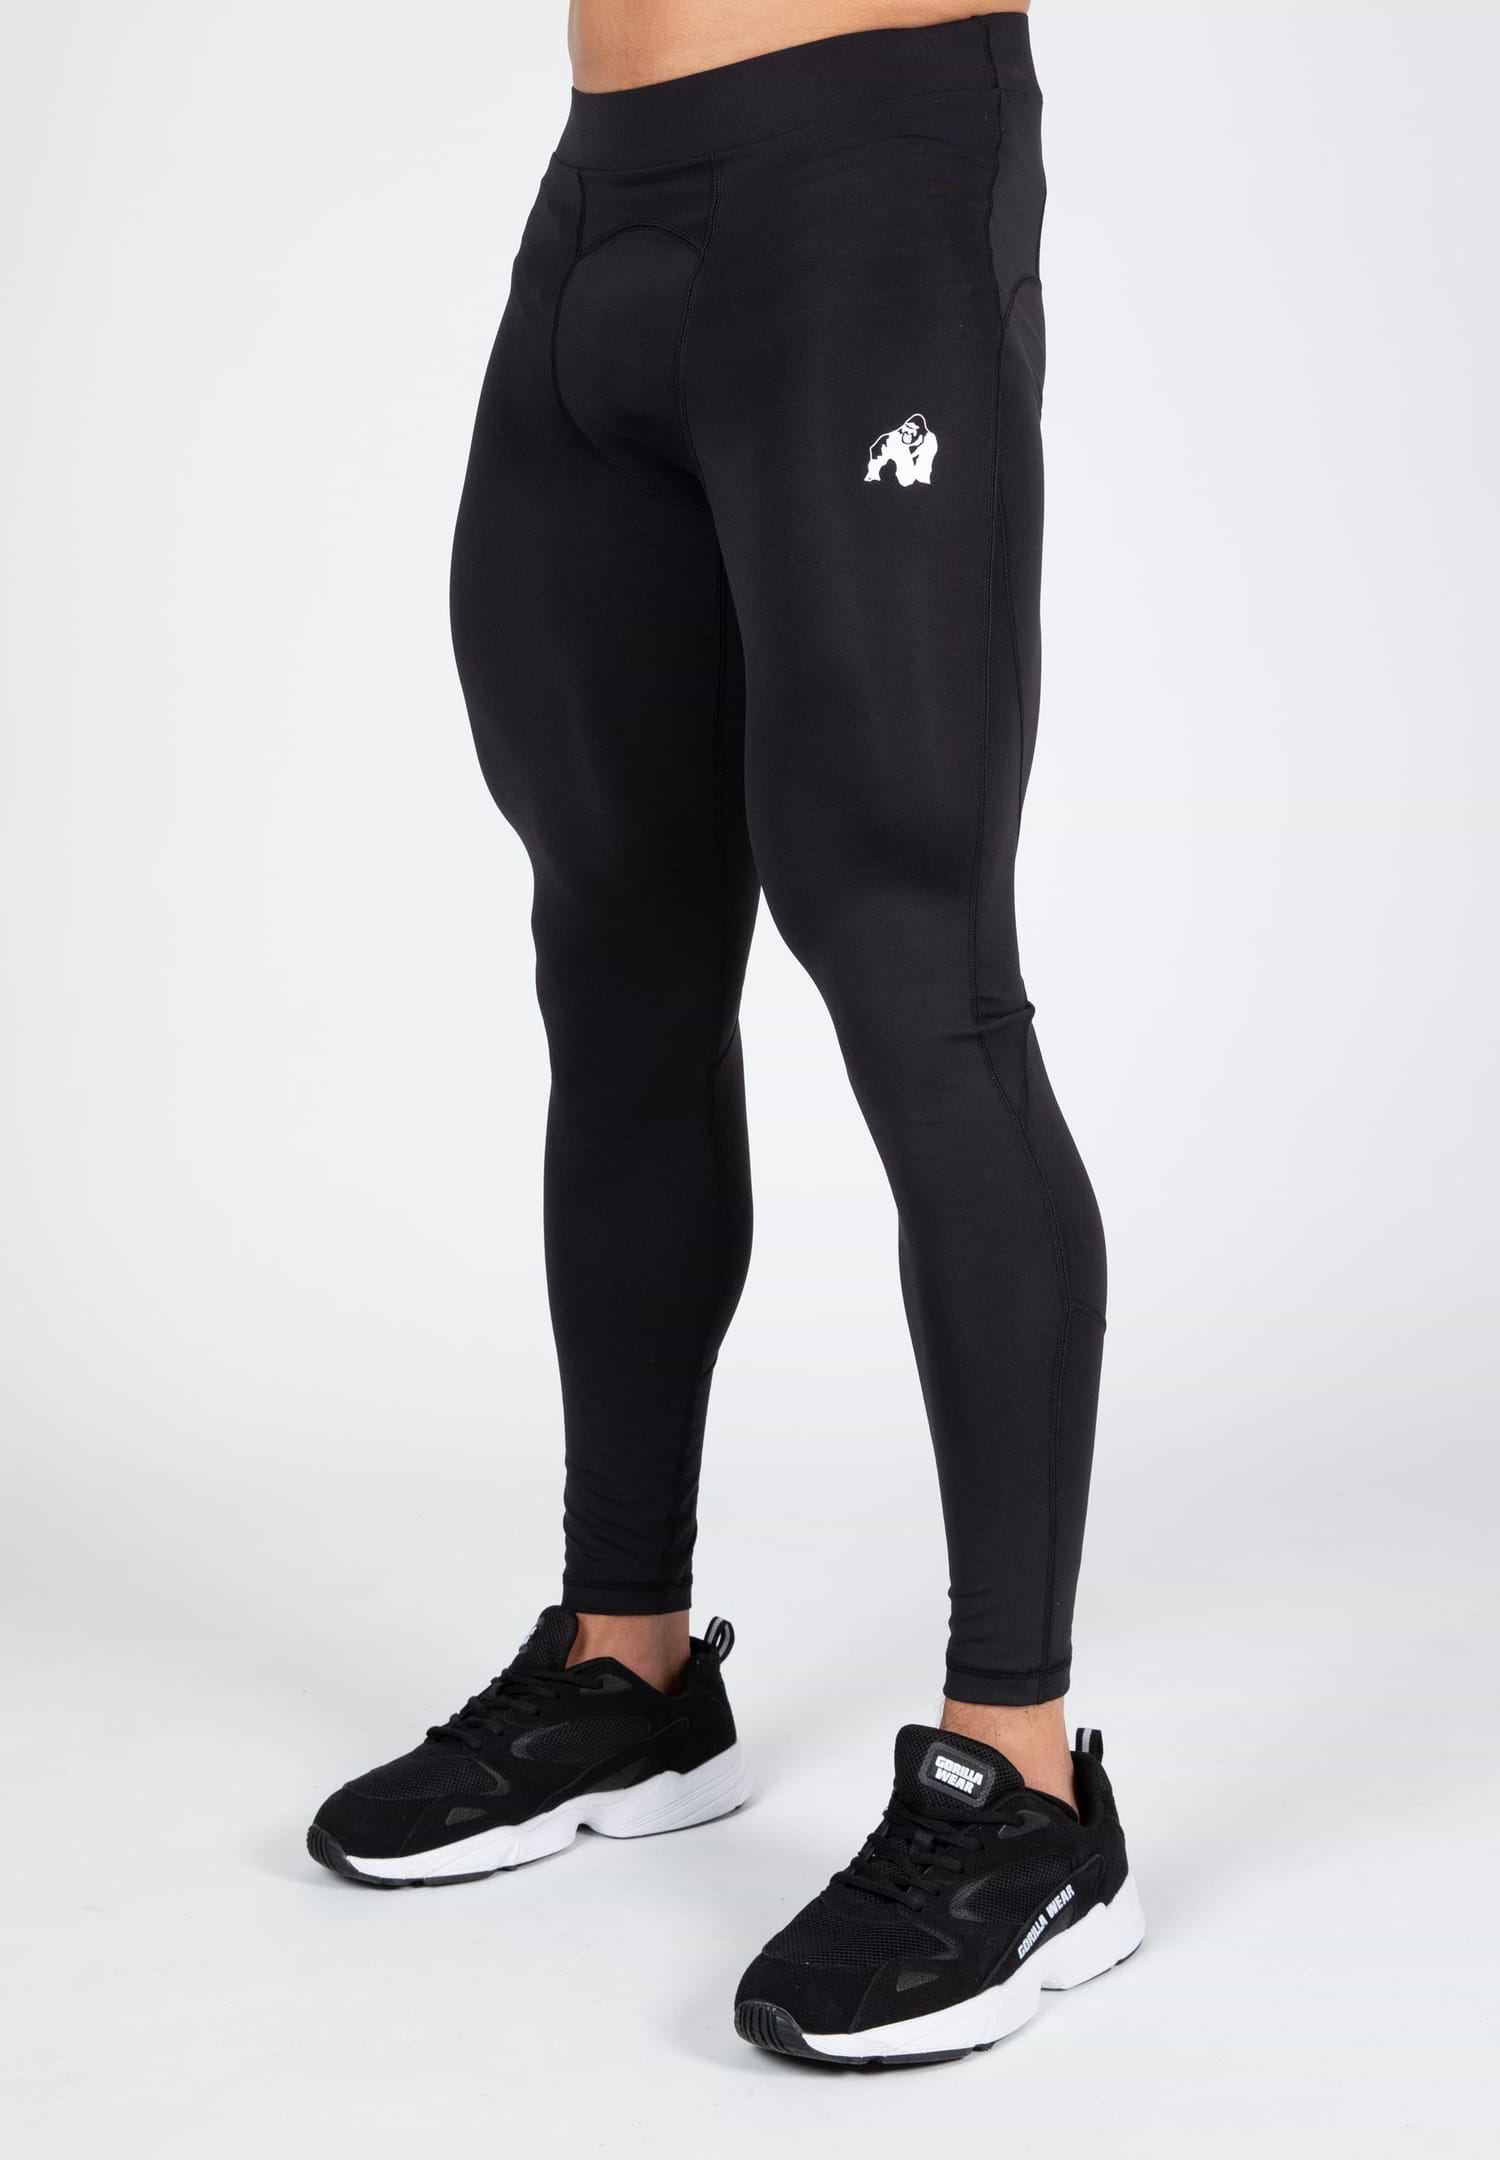 Men's Black Thin Shiny Spandex Tights High Waist Compression Pants Medium M  | eBay